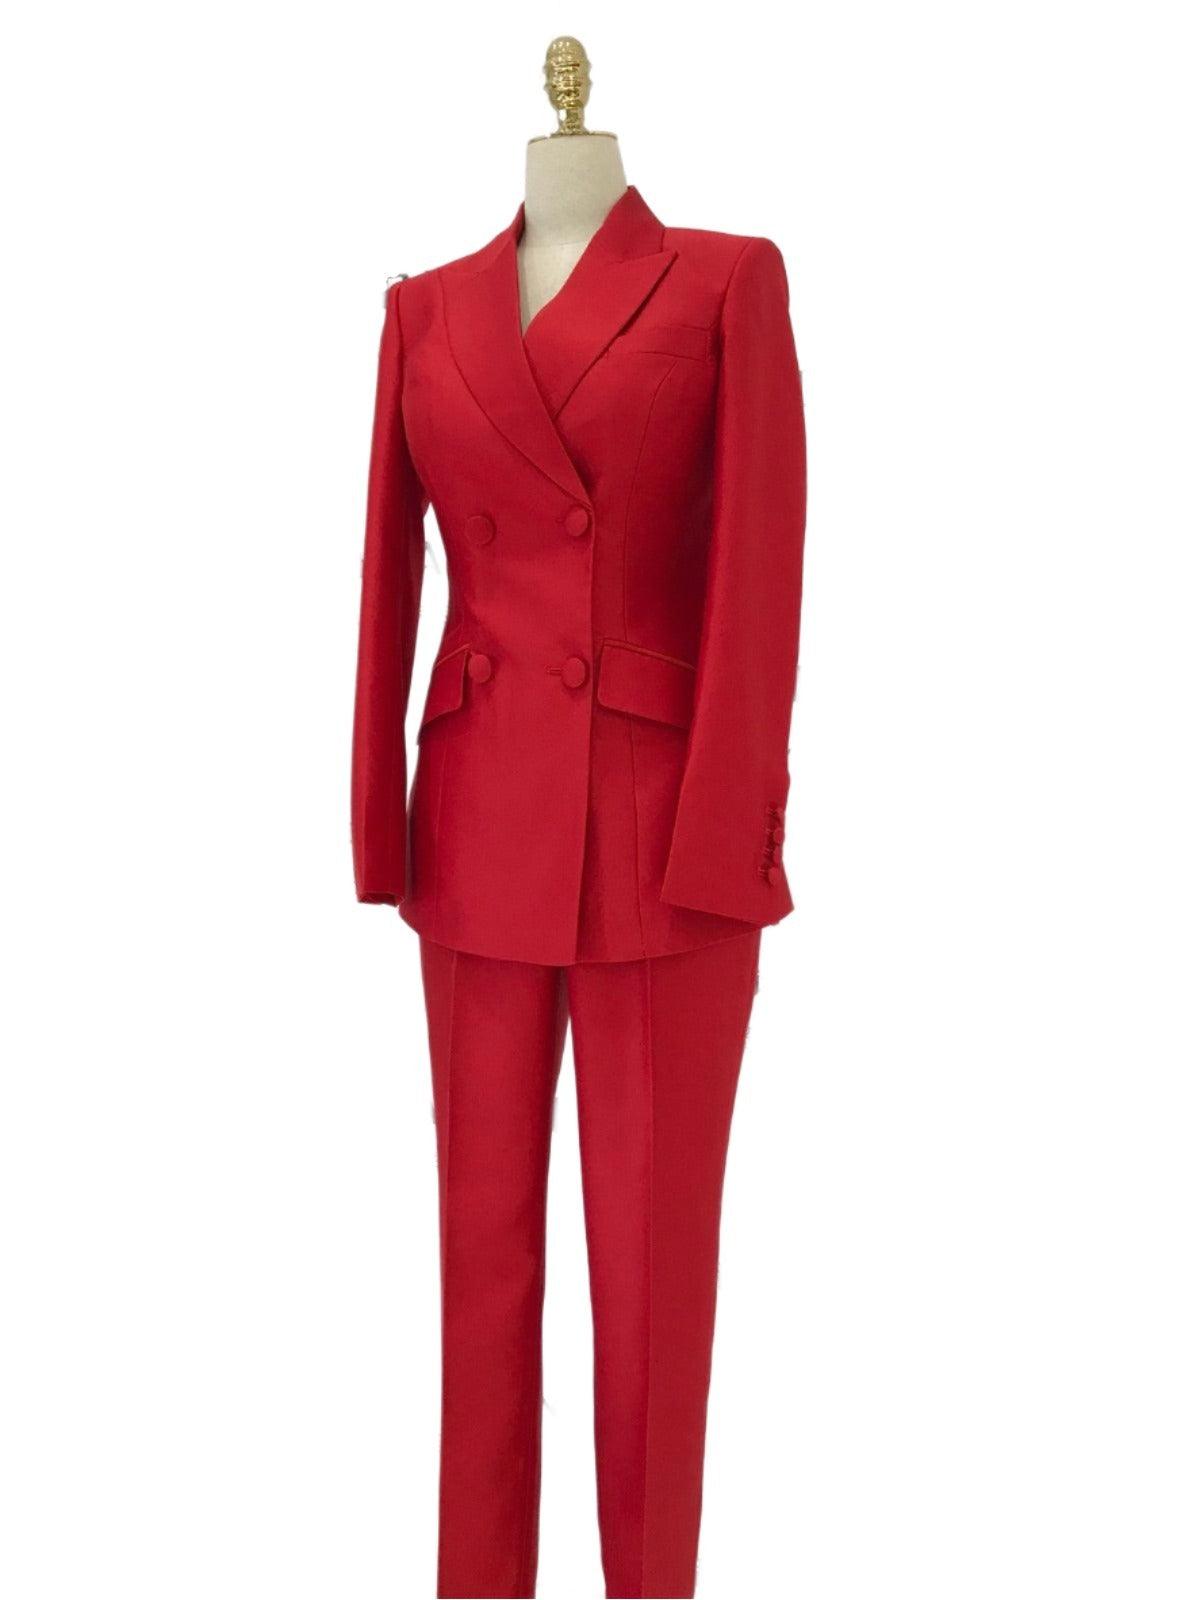 Red 2-Piece Double-Breasted Suit - Women Pant Suit - Pantsuit - Guocali